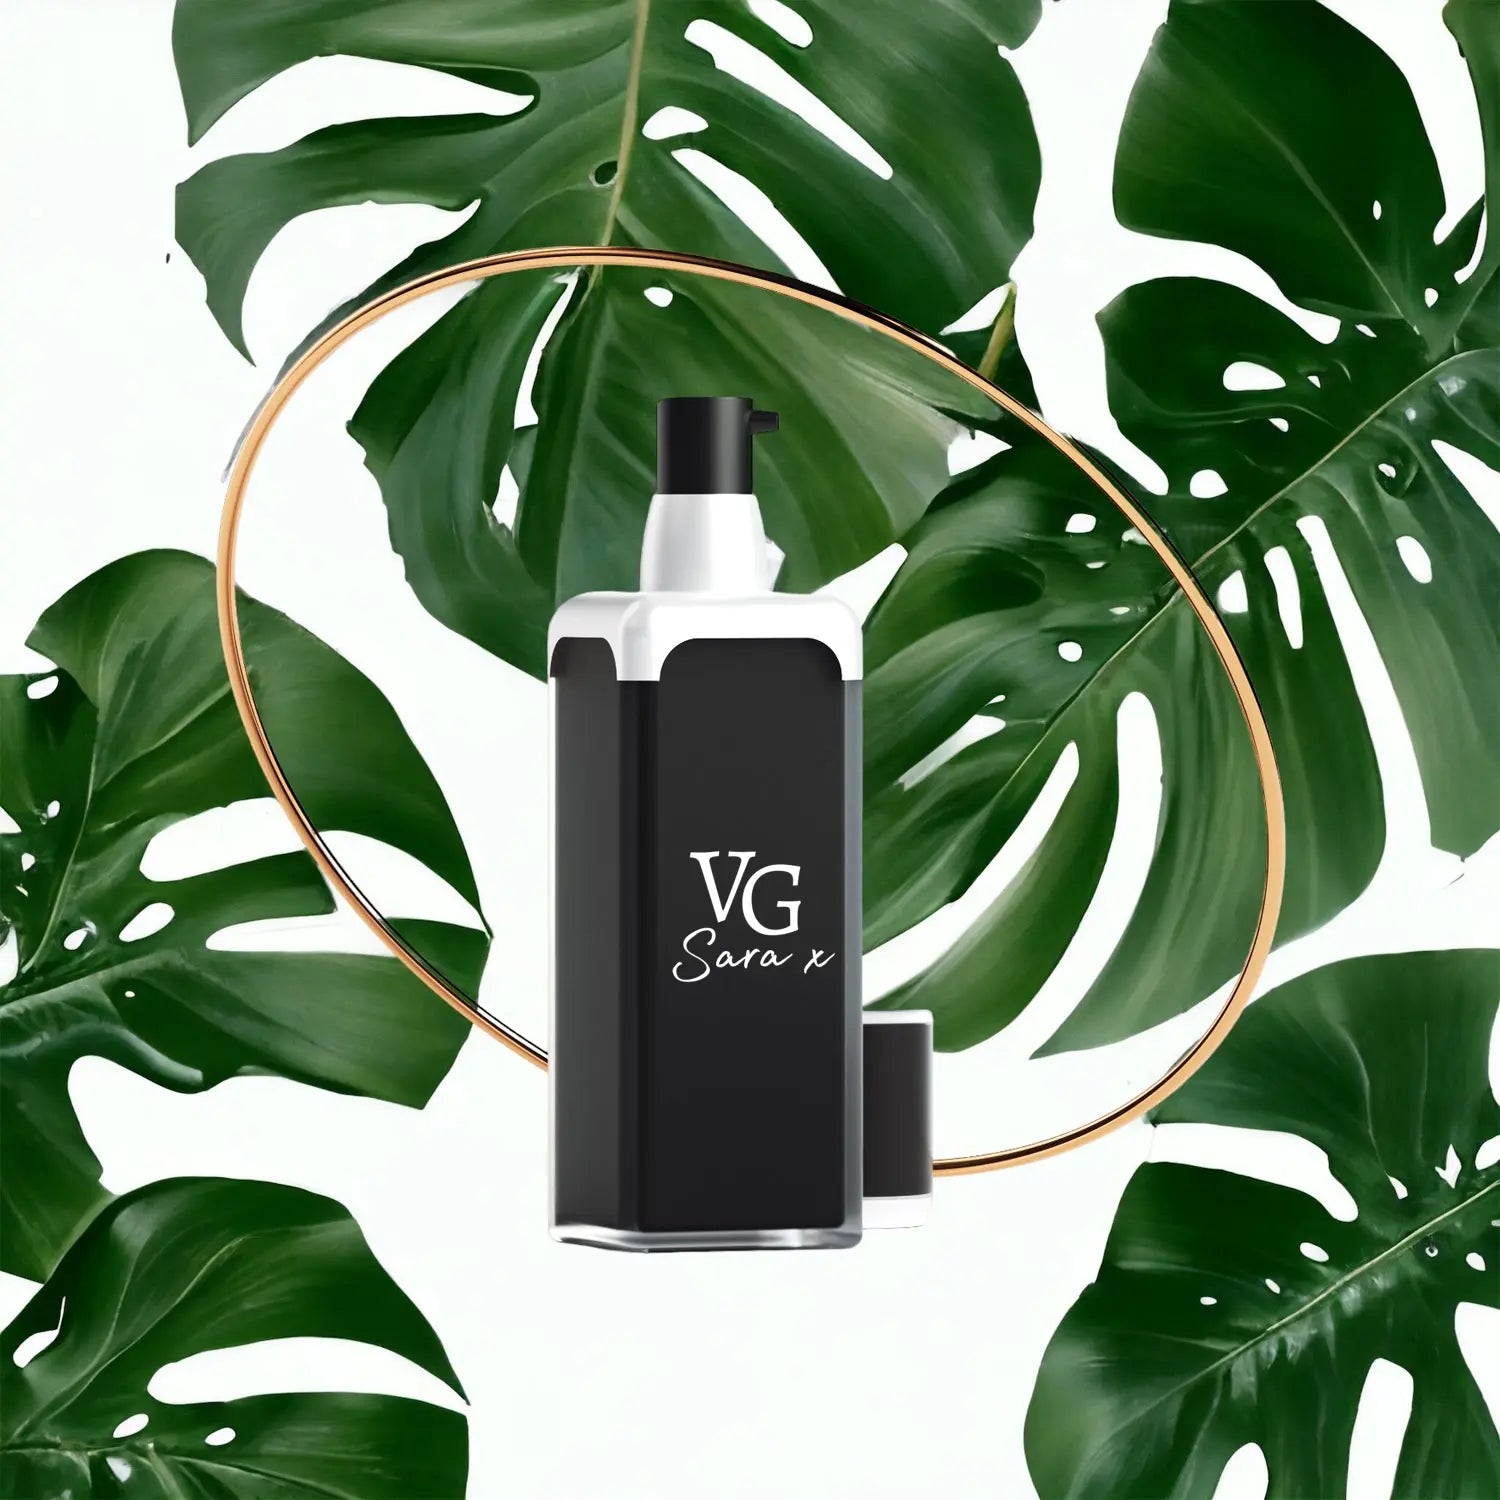 Vg Sara x's Luxurious Anti-Aging Serum bottle displayed alongside some green leaves 